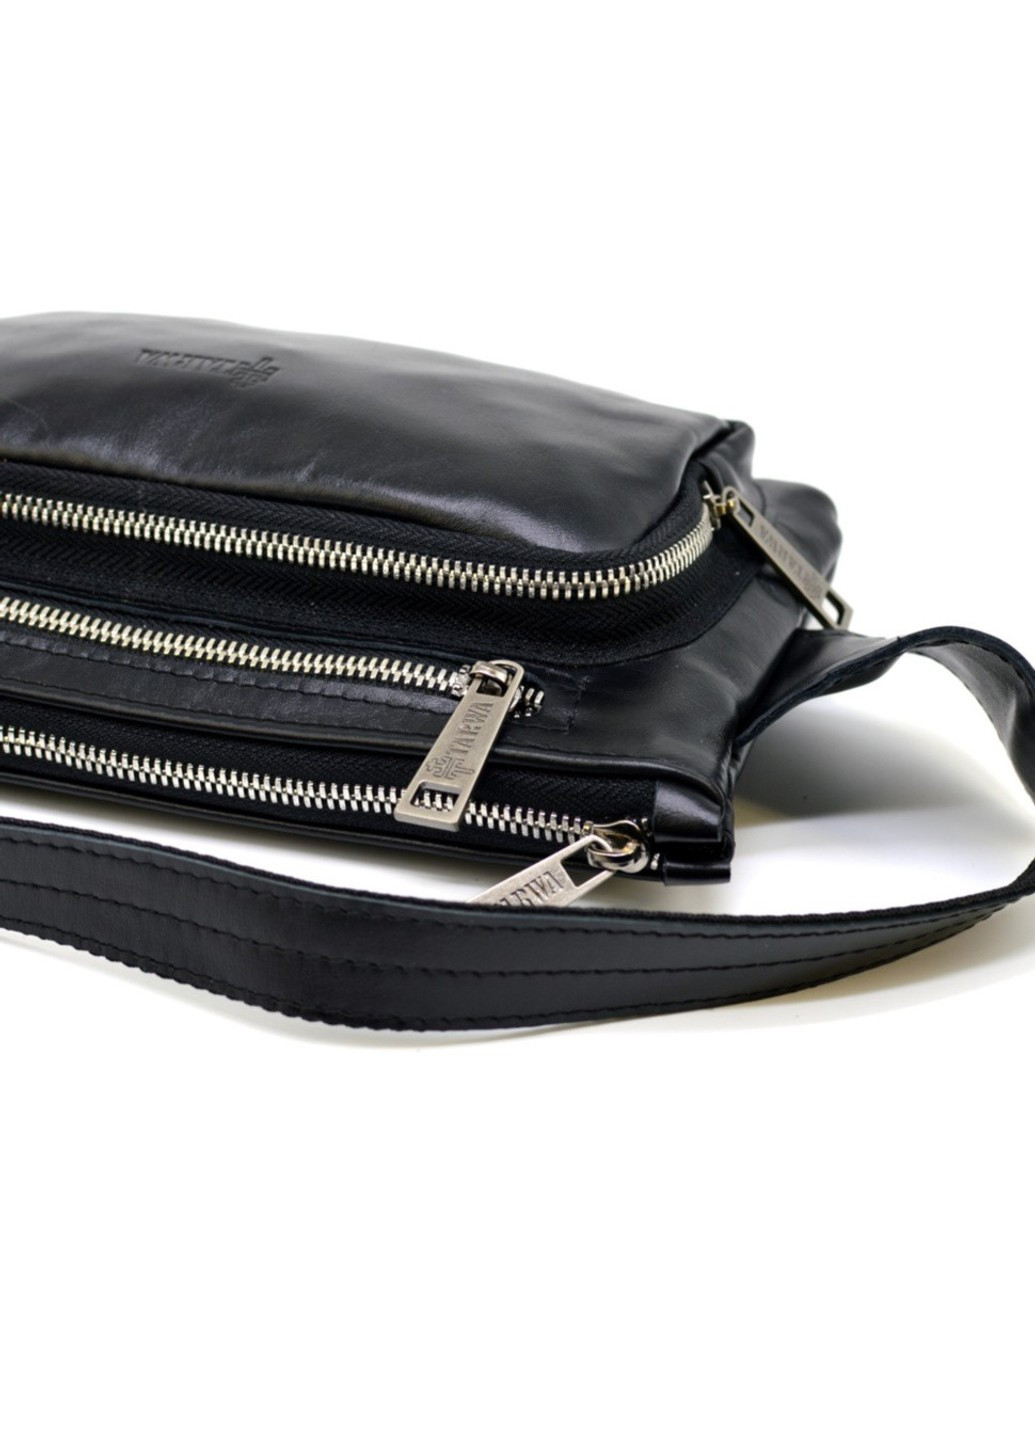 Кожаная черная сумка на пояс ga-8137-4lx TARWA (263776545)